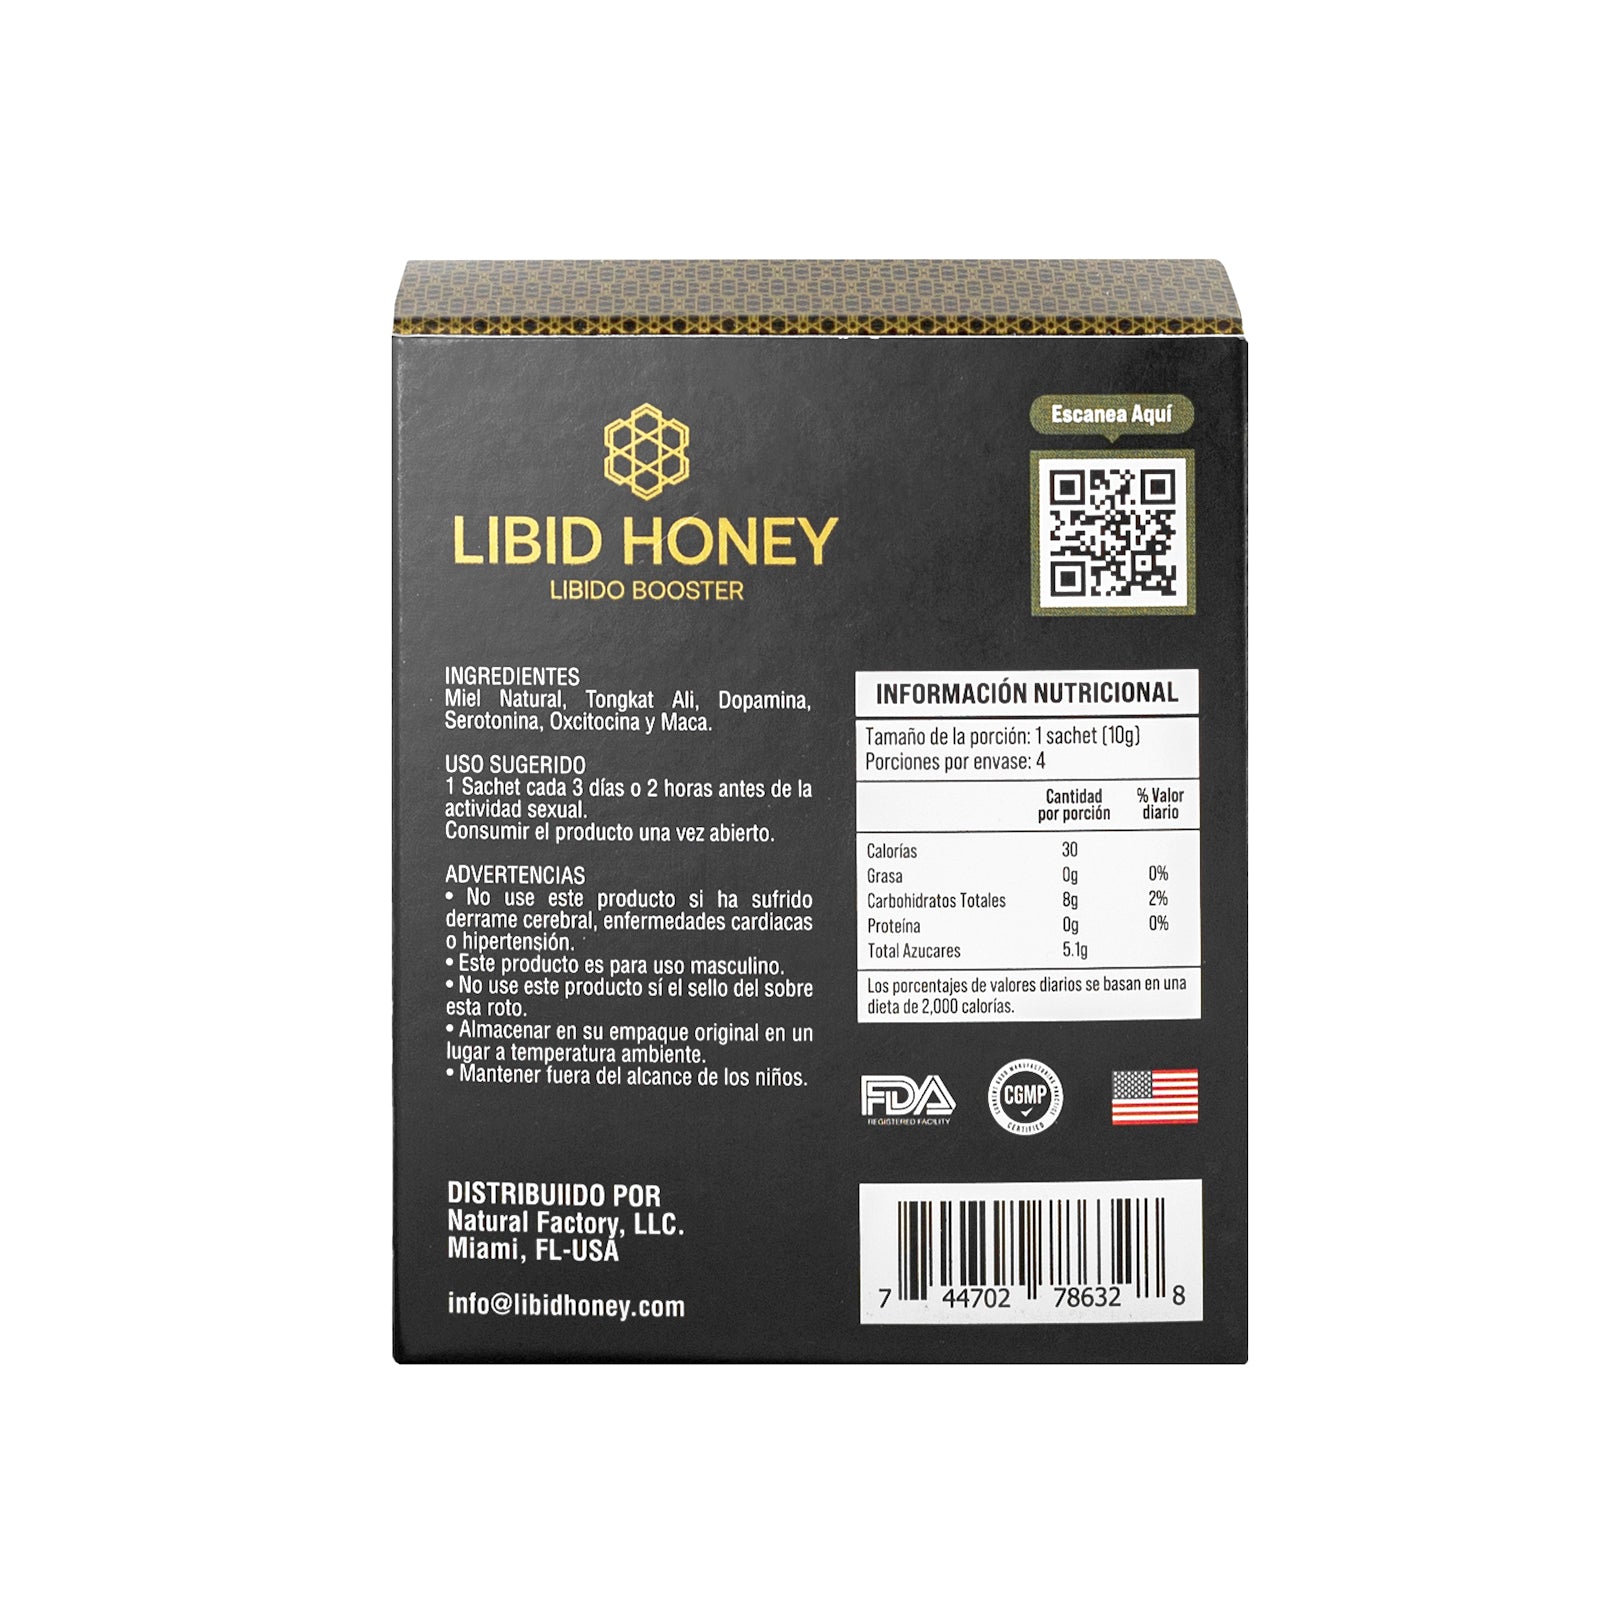 Libid Honey box from back. Libido Booster. Contains 12 sachet. 10 G each.